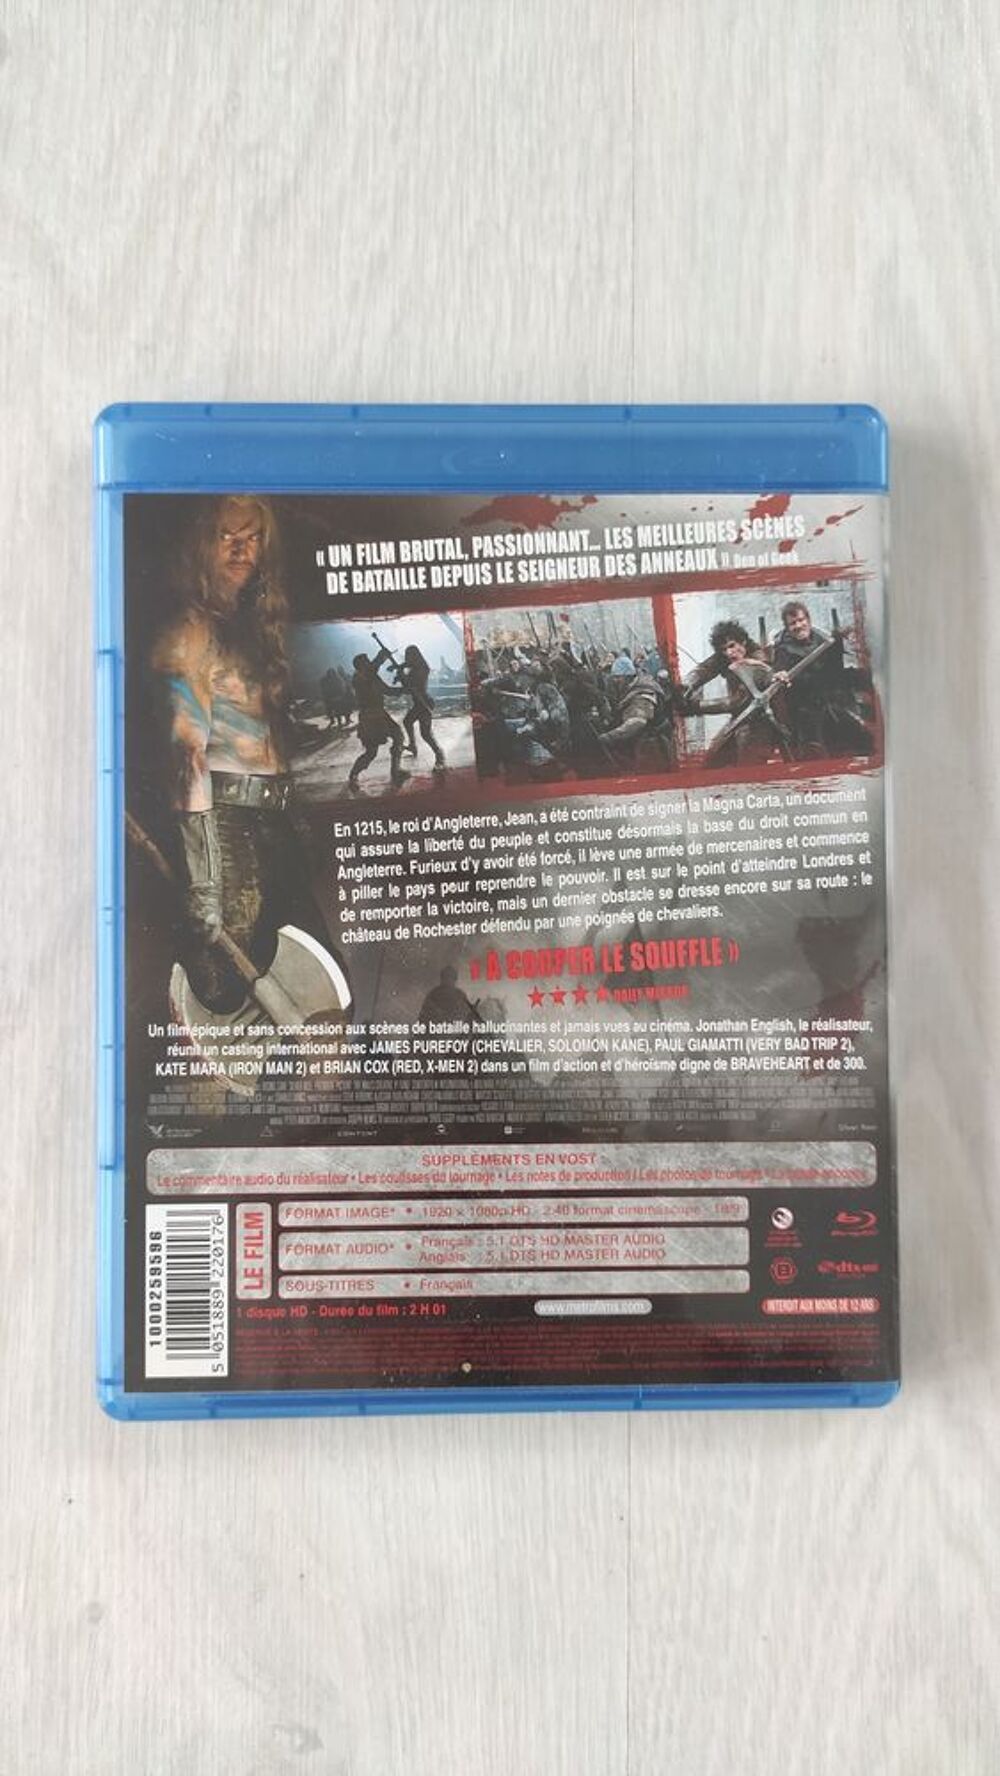 Bluray : Le Sang Des Templiers DVD et blu-ray